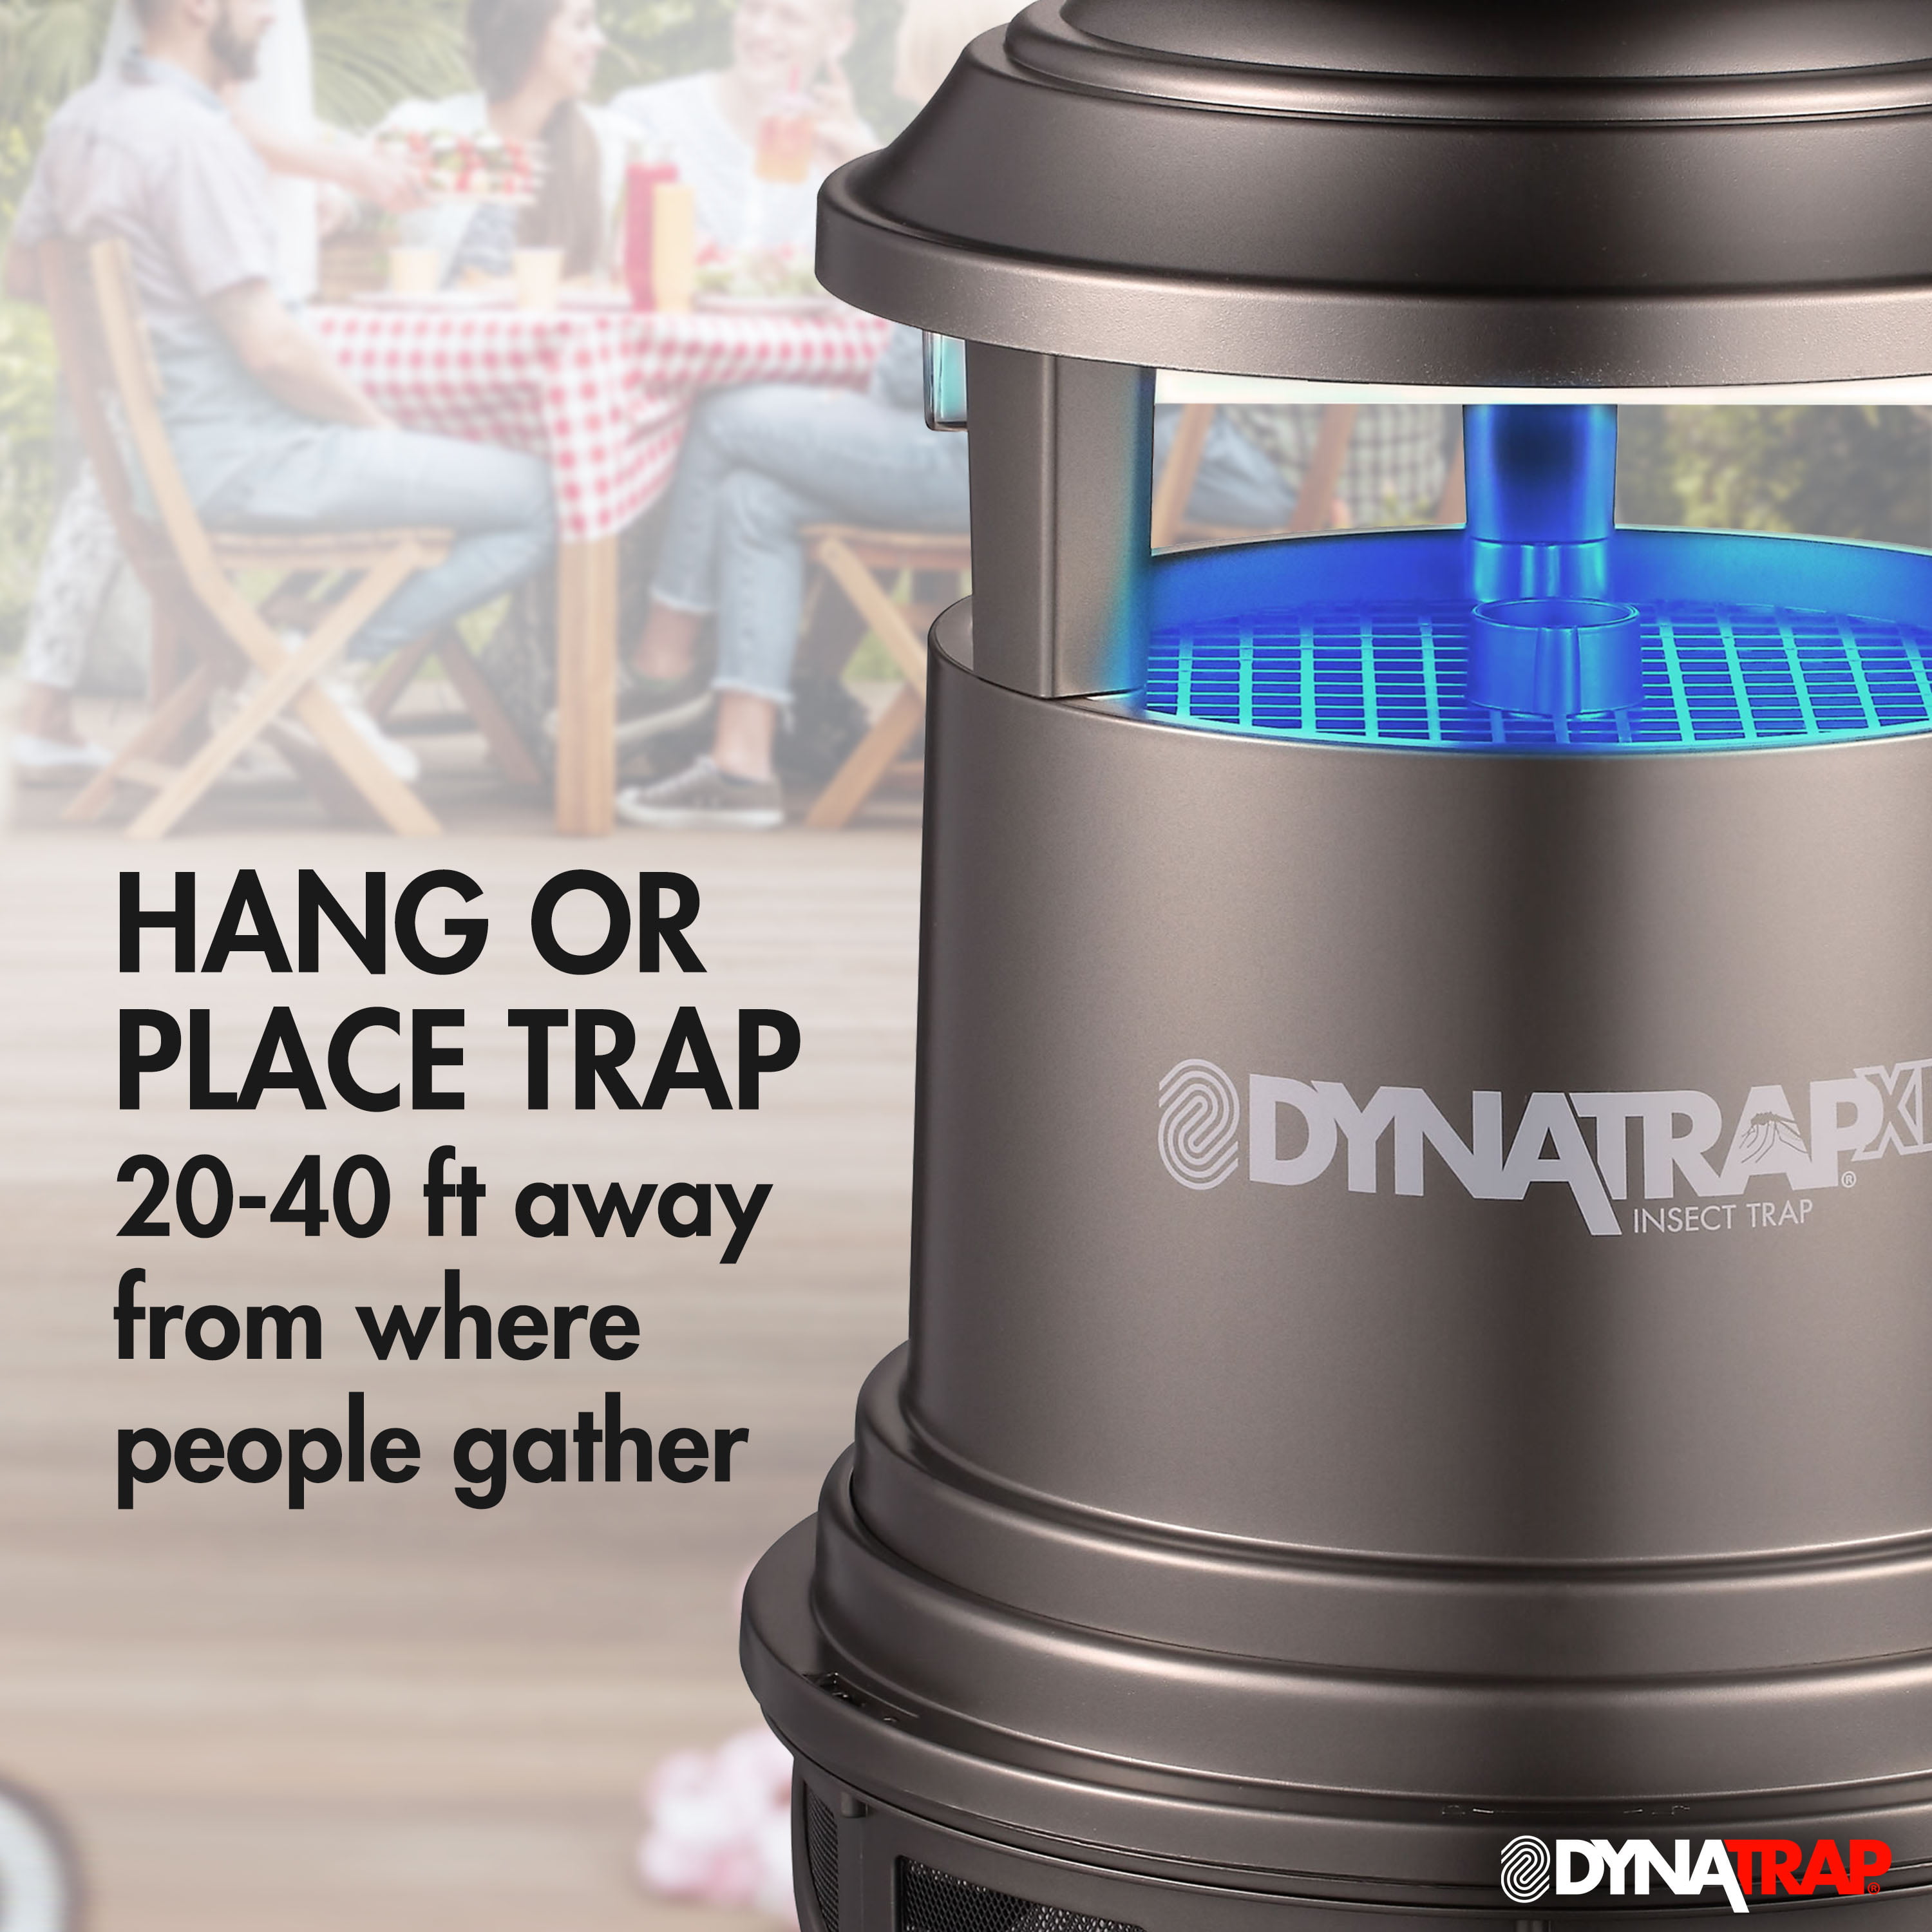 DynaTrap® 1/2 Acre - Insect Trap